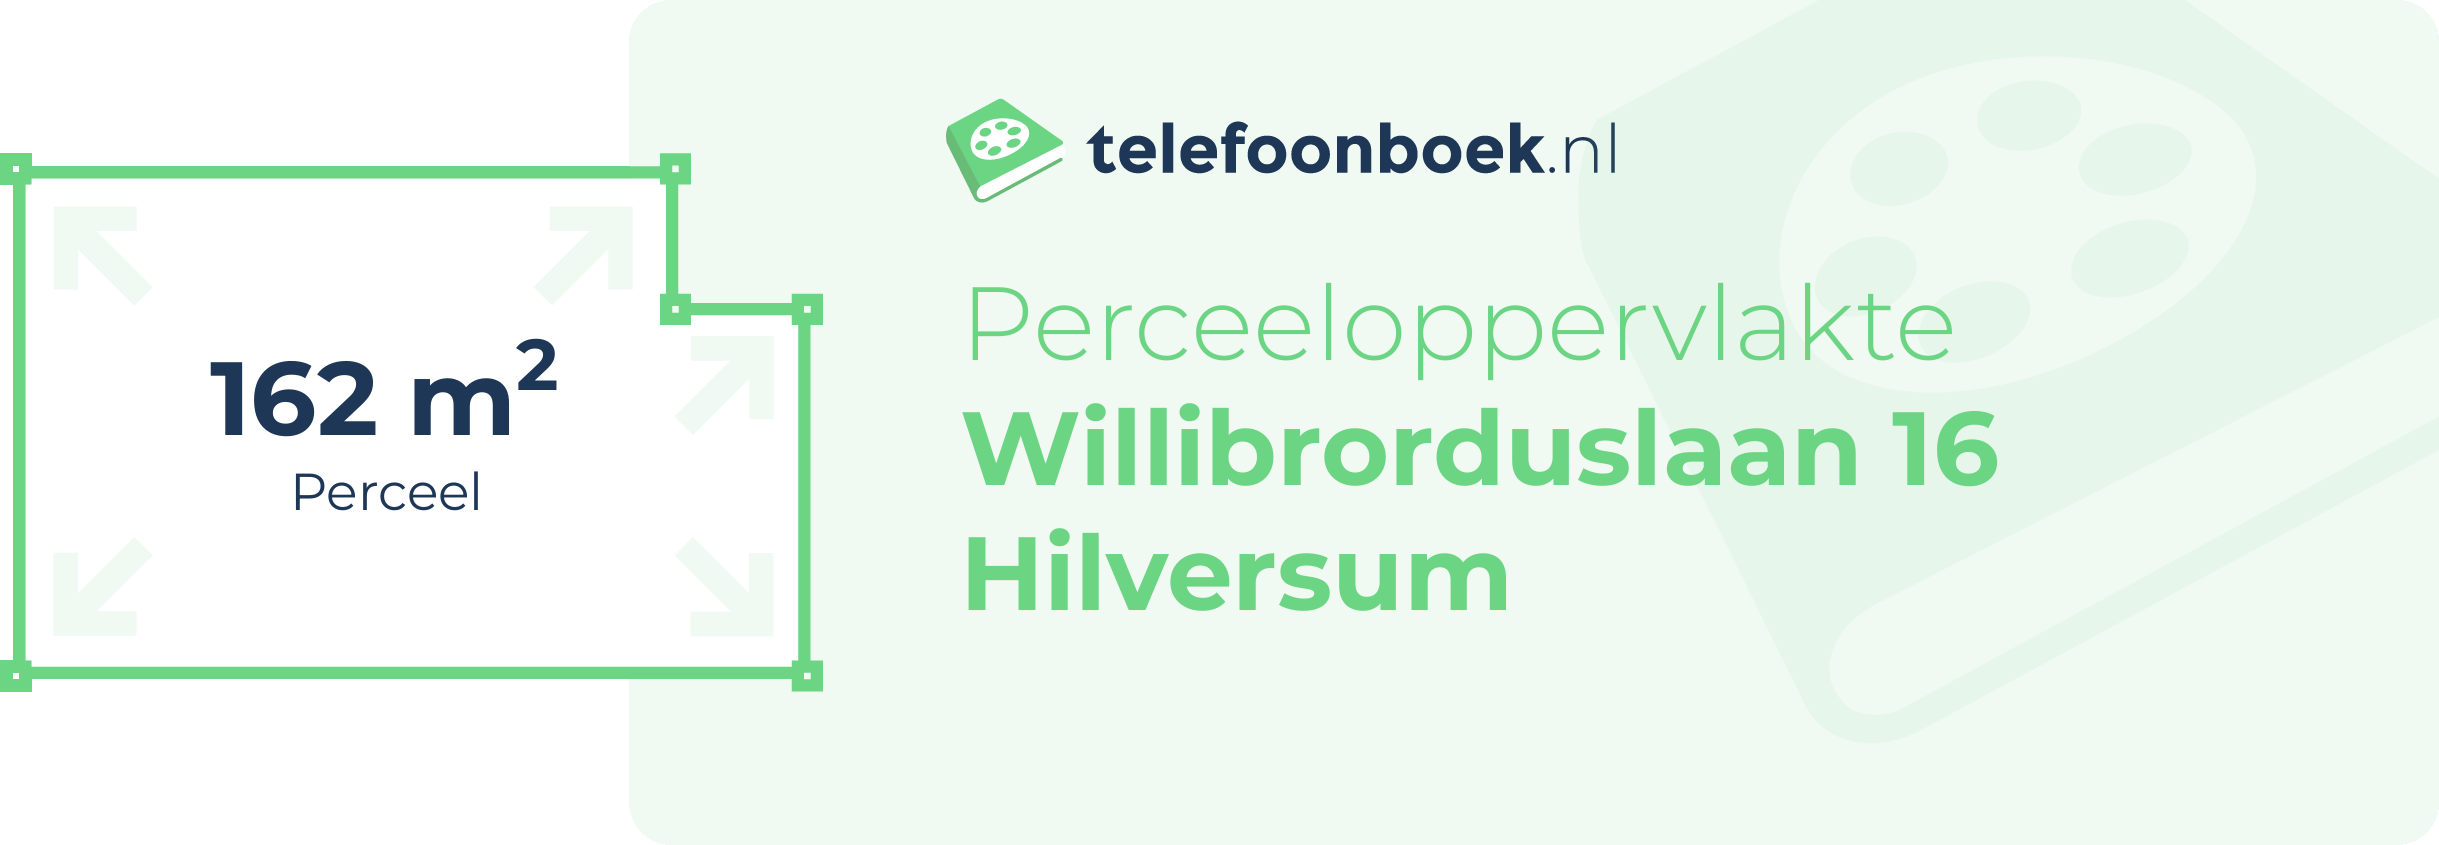 Perceeloppervlakte Willibrorduslaan 16 Hilversum